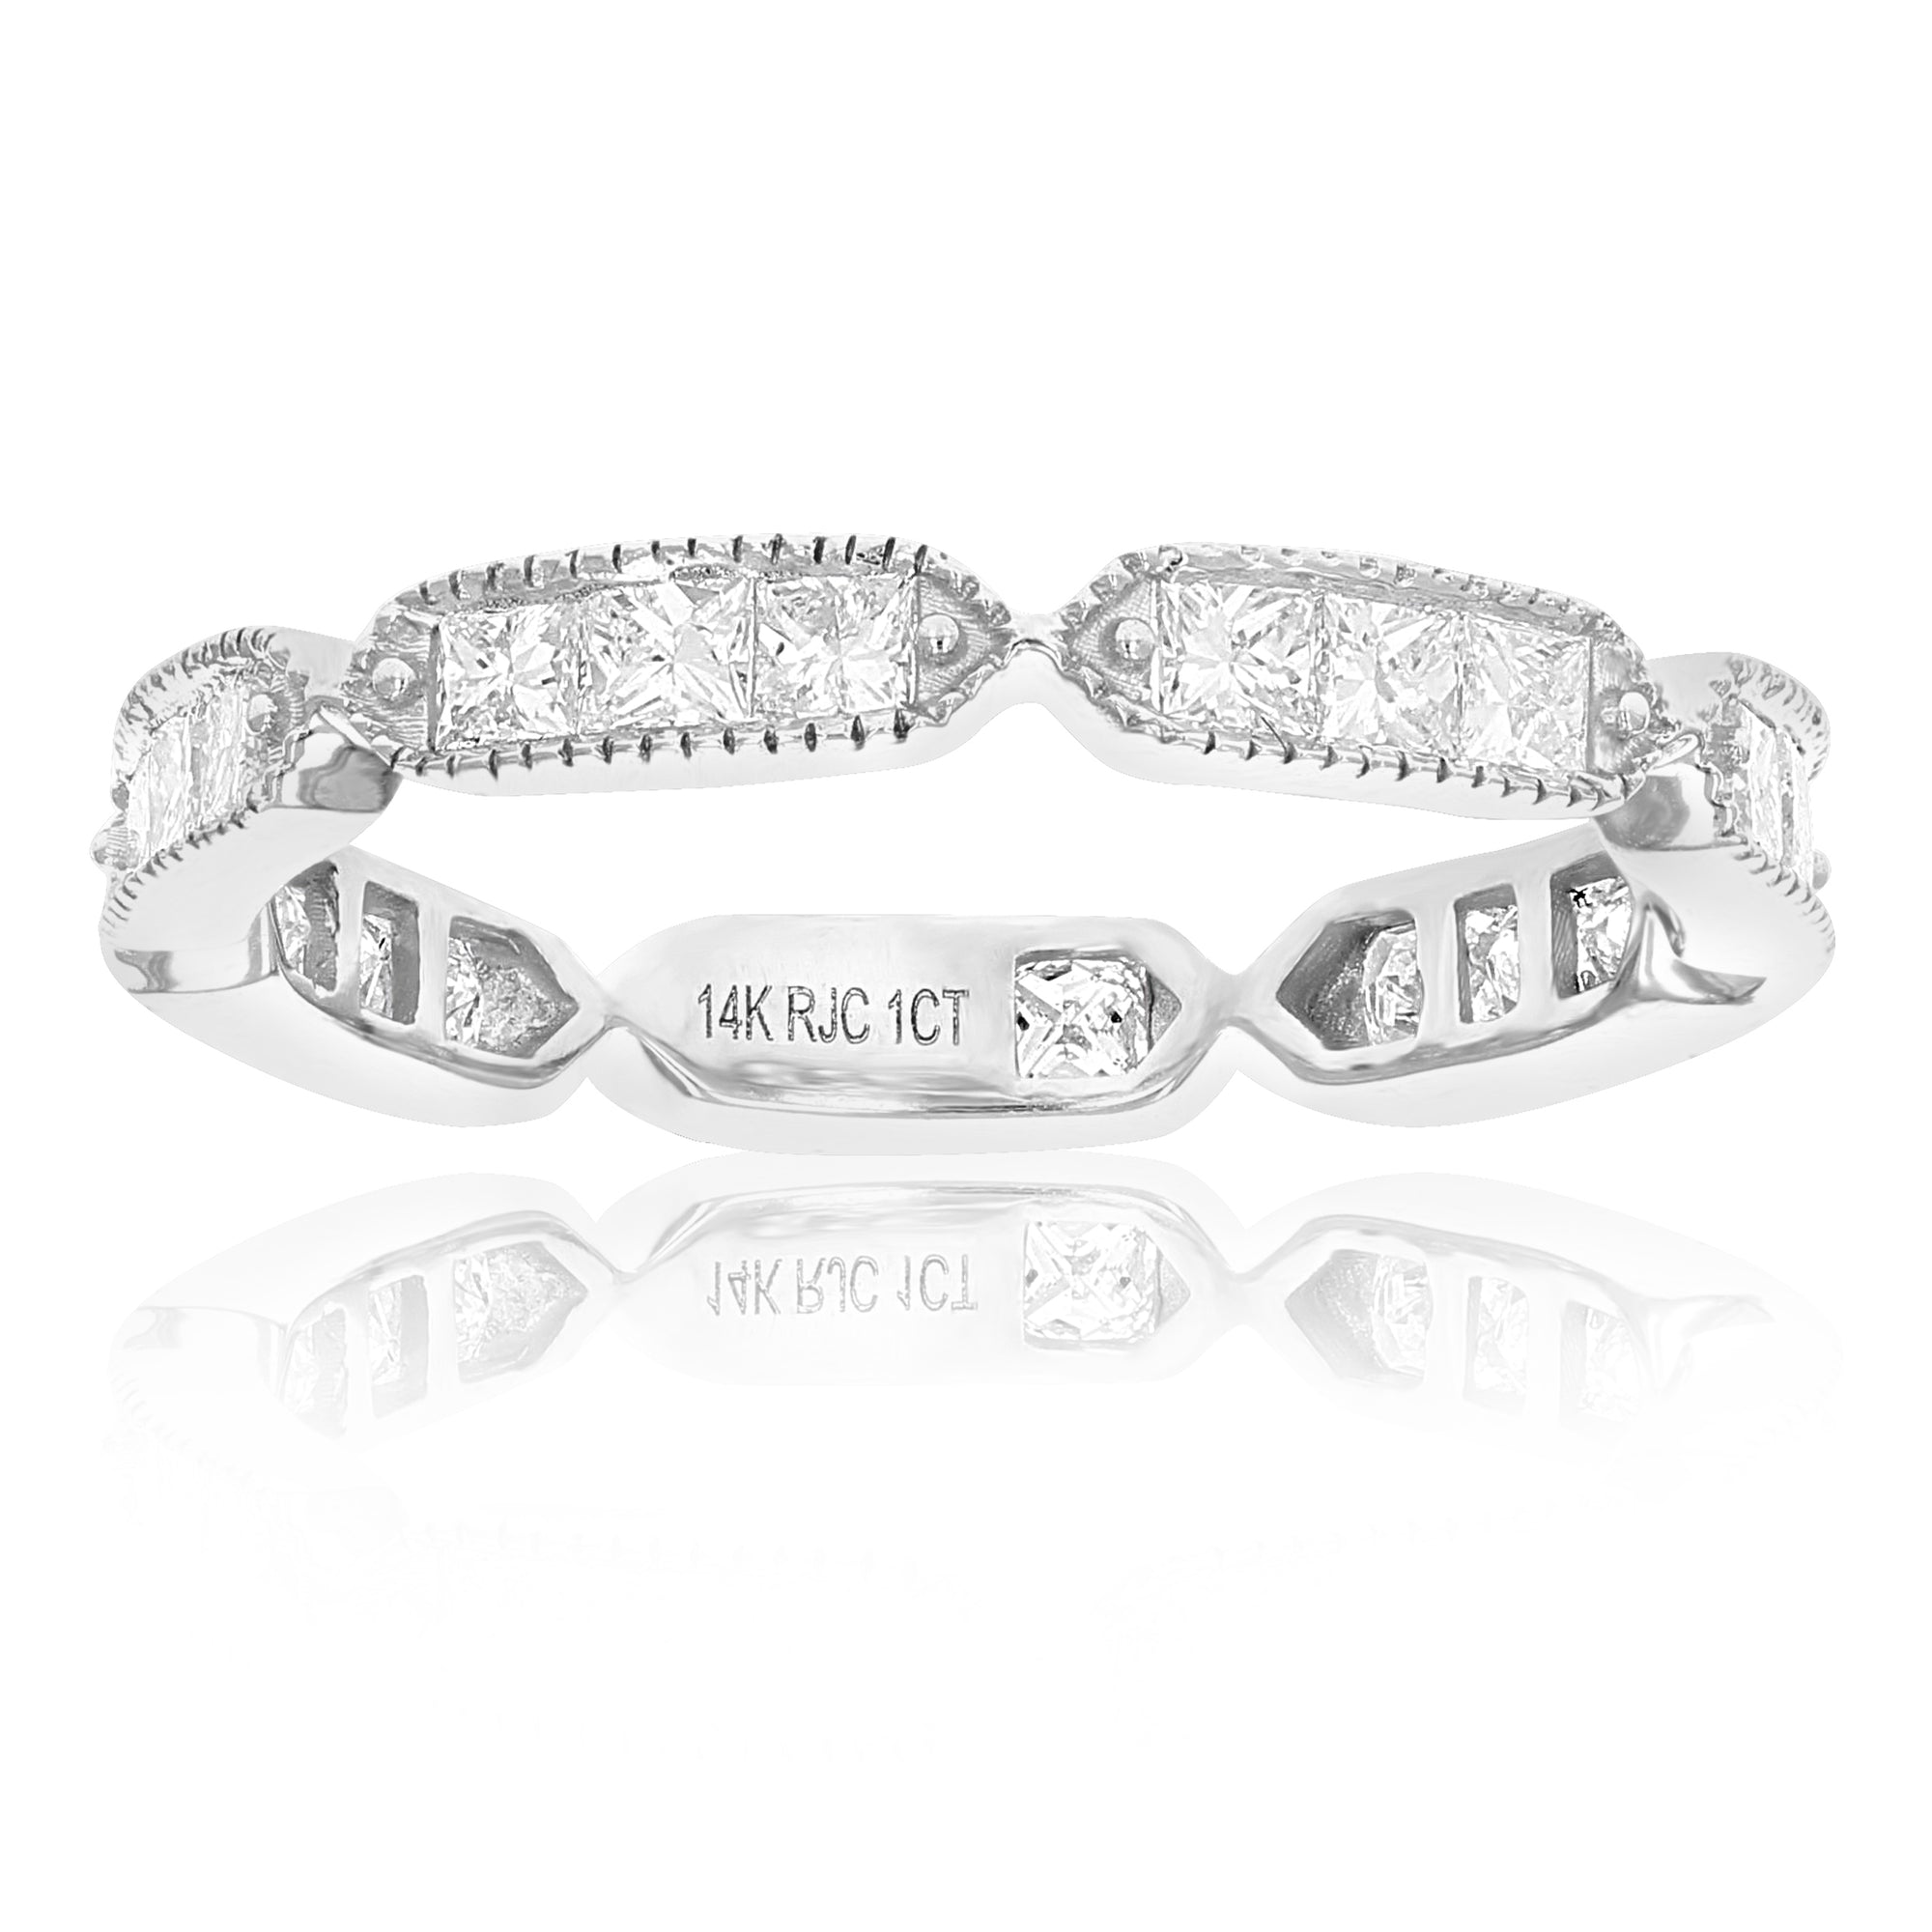 1 cttw Princess Diamond Eternity Ring Wedding Band with Milgrain 14K White Gold